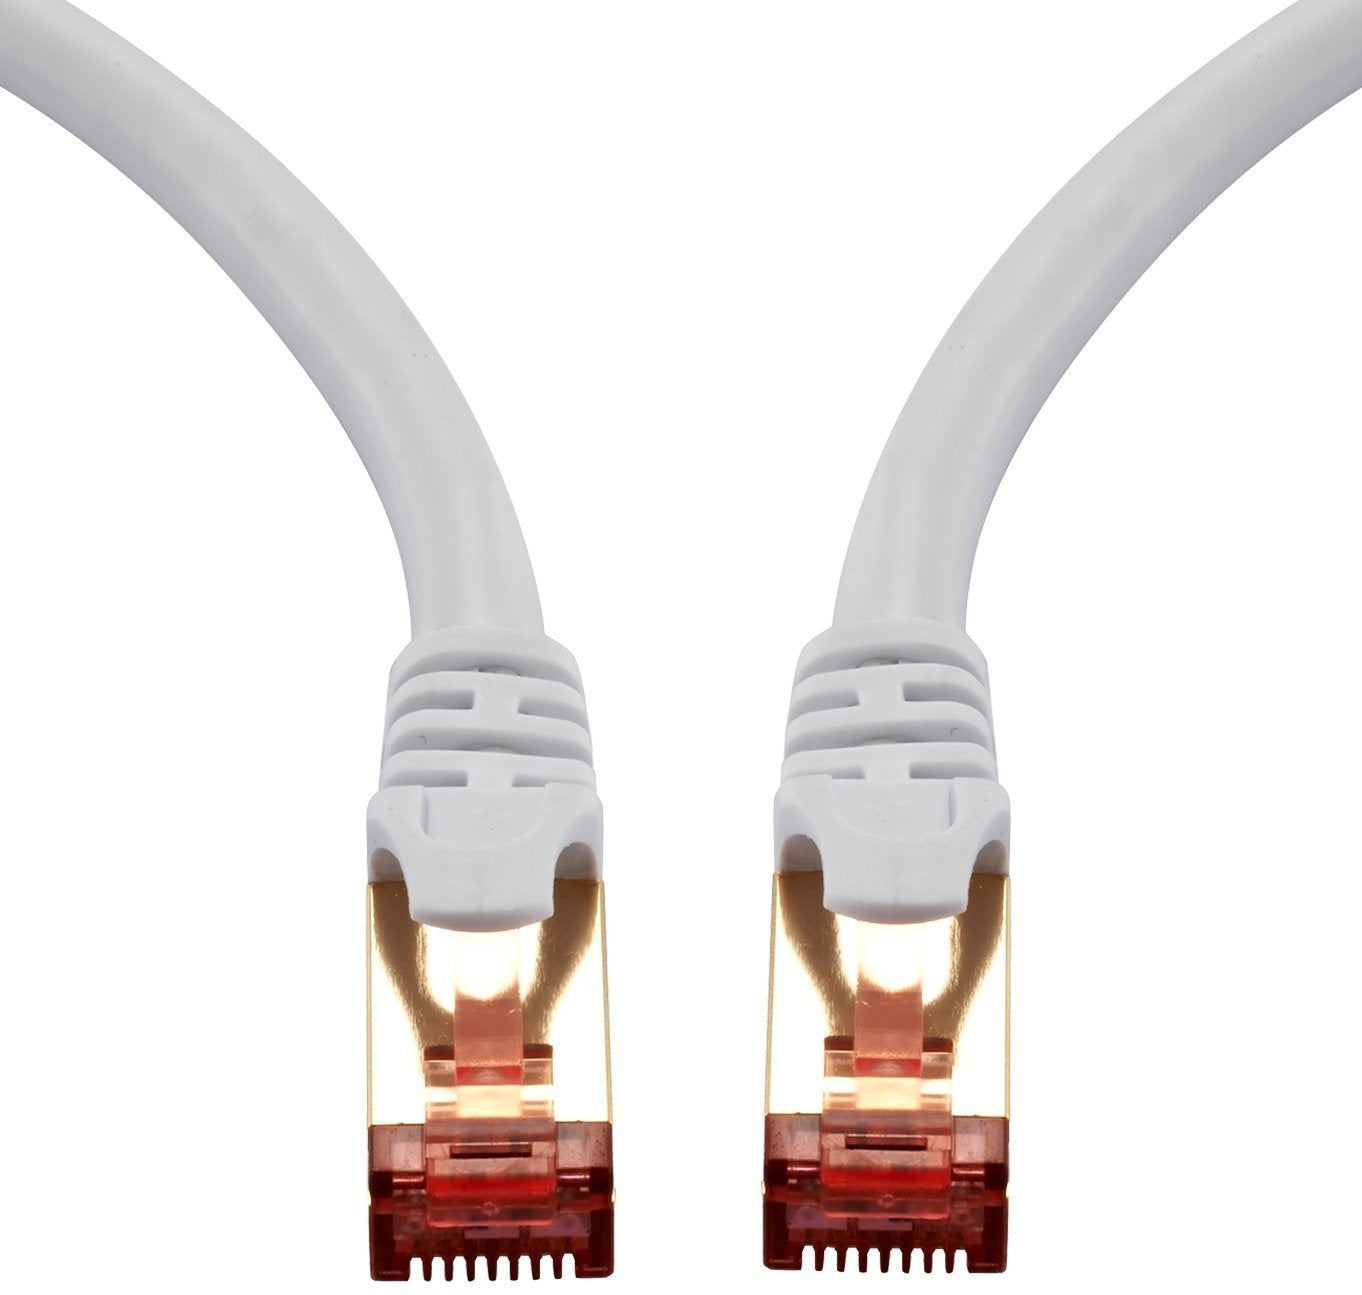 Ethernet Gigabit Lan Network Cable (RJ45) Advanced CAT 7 |Gold Connectors| 10Gbps 600MHz |10/100/1000Mbit/s | Patch cable |STP| compatible with CAT.5 / CAT.5e / CAT.6 | Switch/Router/Modem/Patch panel / Access Point / patch fields | 30M IBRA Round White